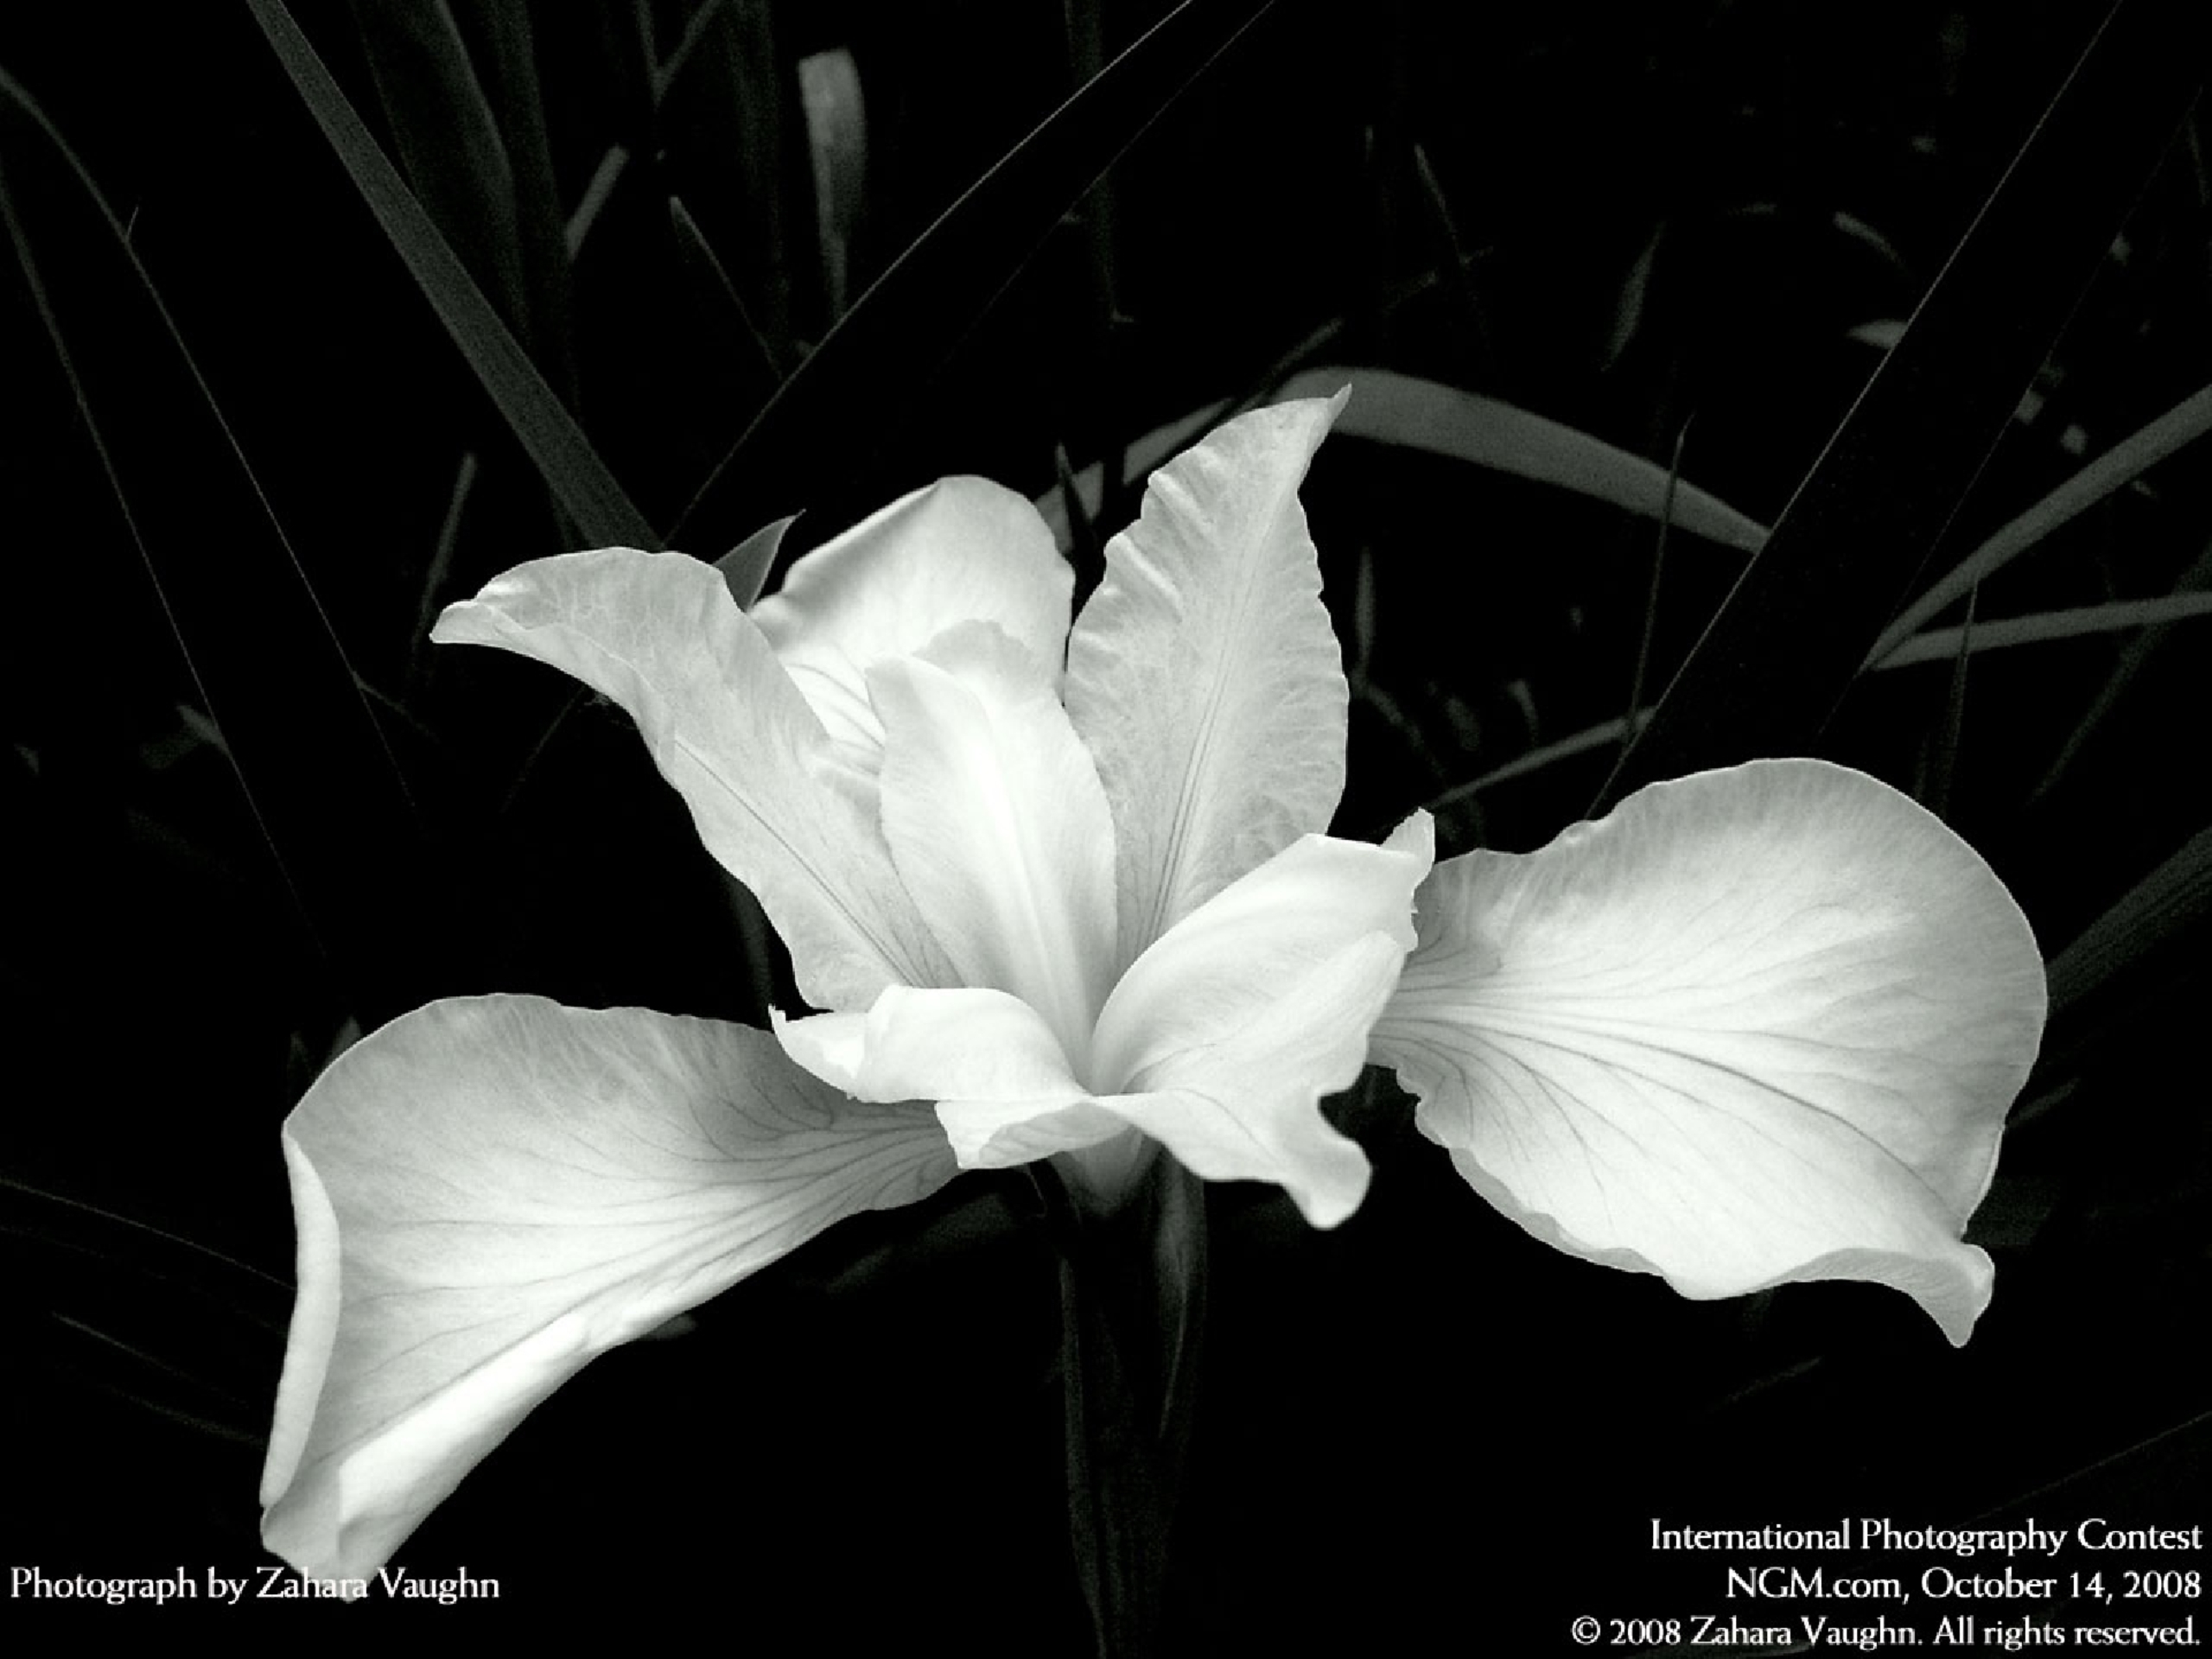 [49+] Black Wallpaper with White Flowers | WallpaperSafari.com